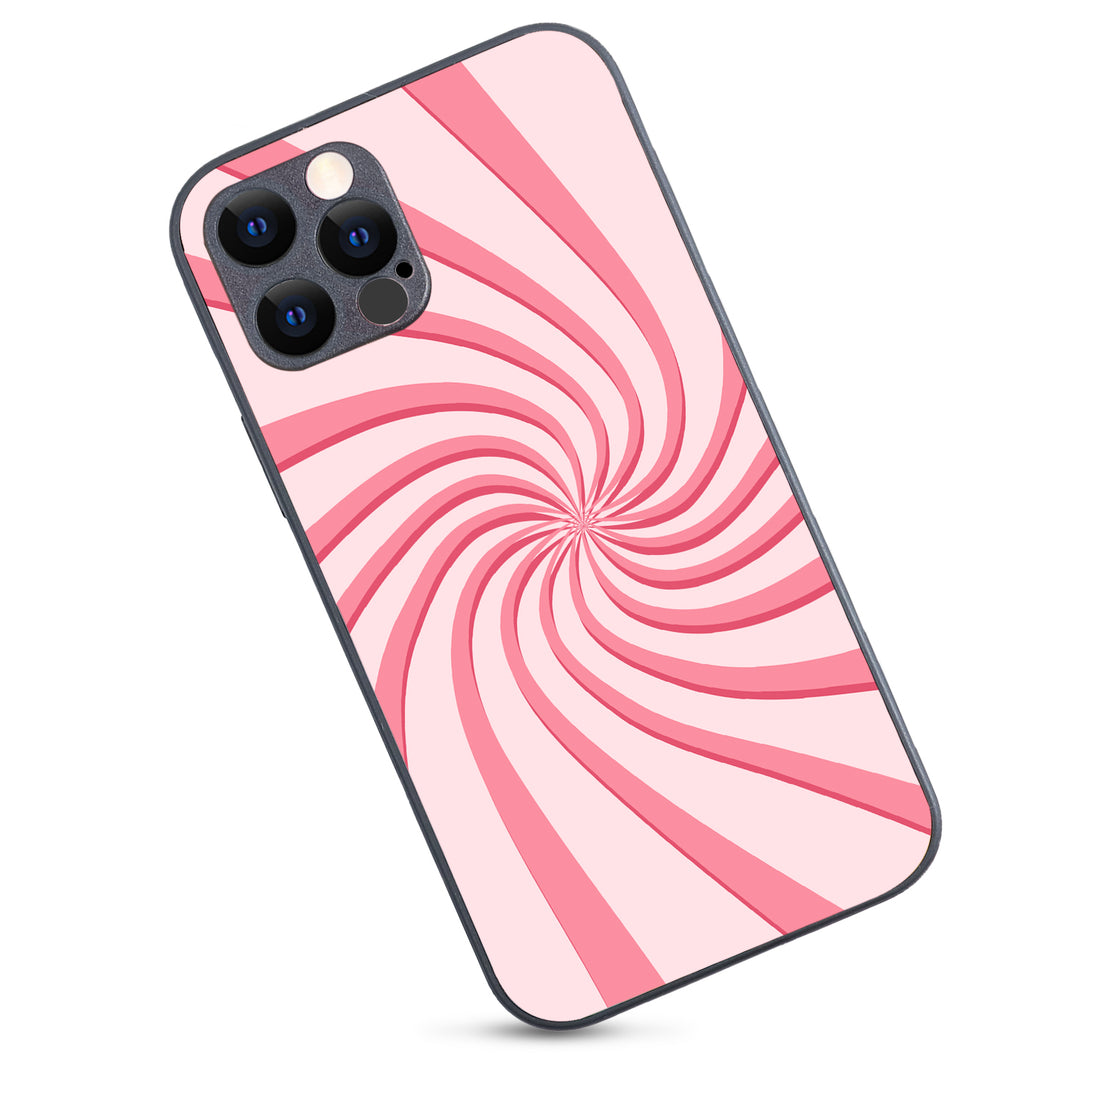 Spiral Optical Illusion iPhone 12 Pro Case